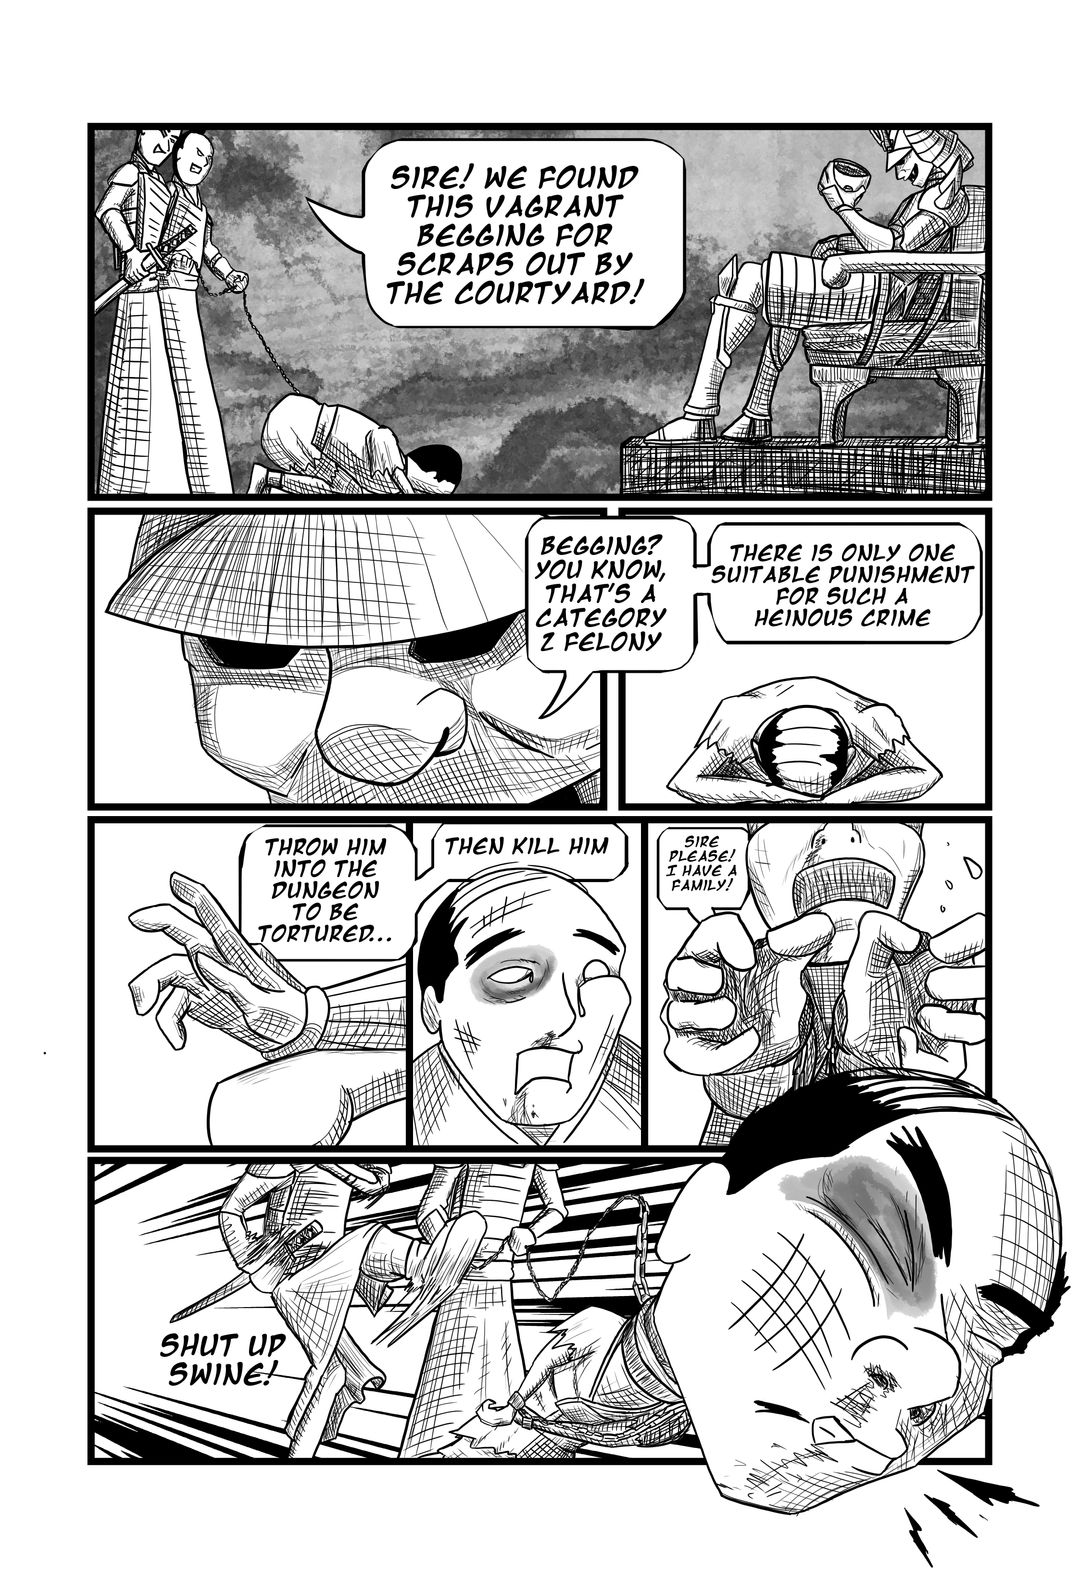 Shotgun Samurai 12 panel 2